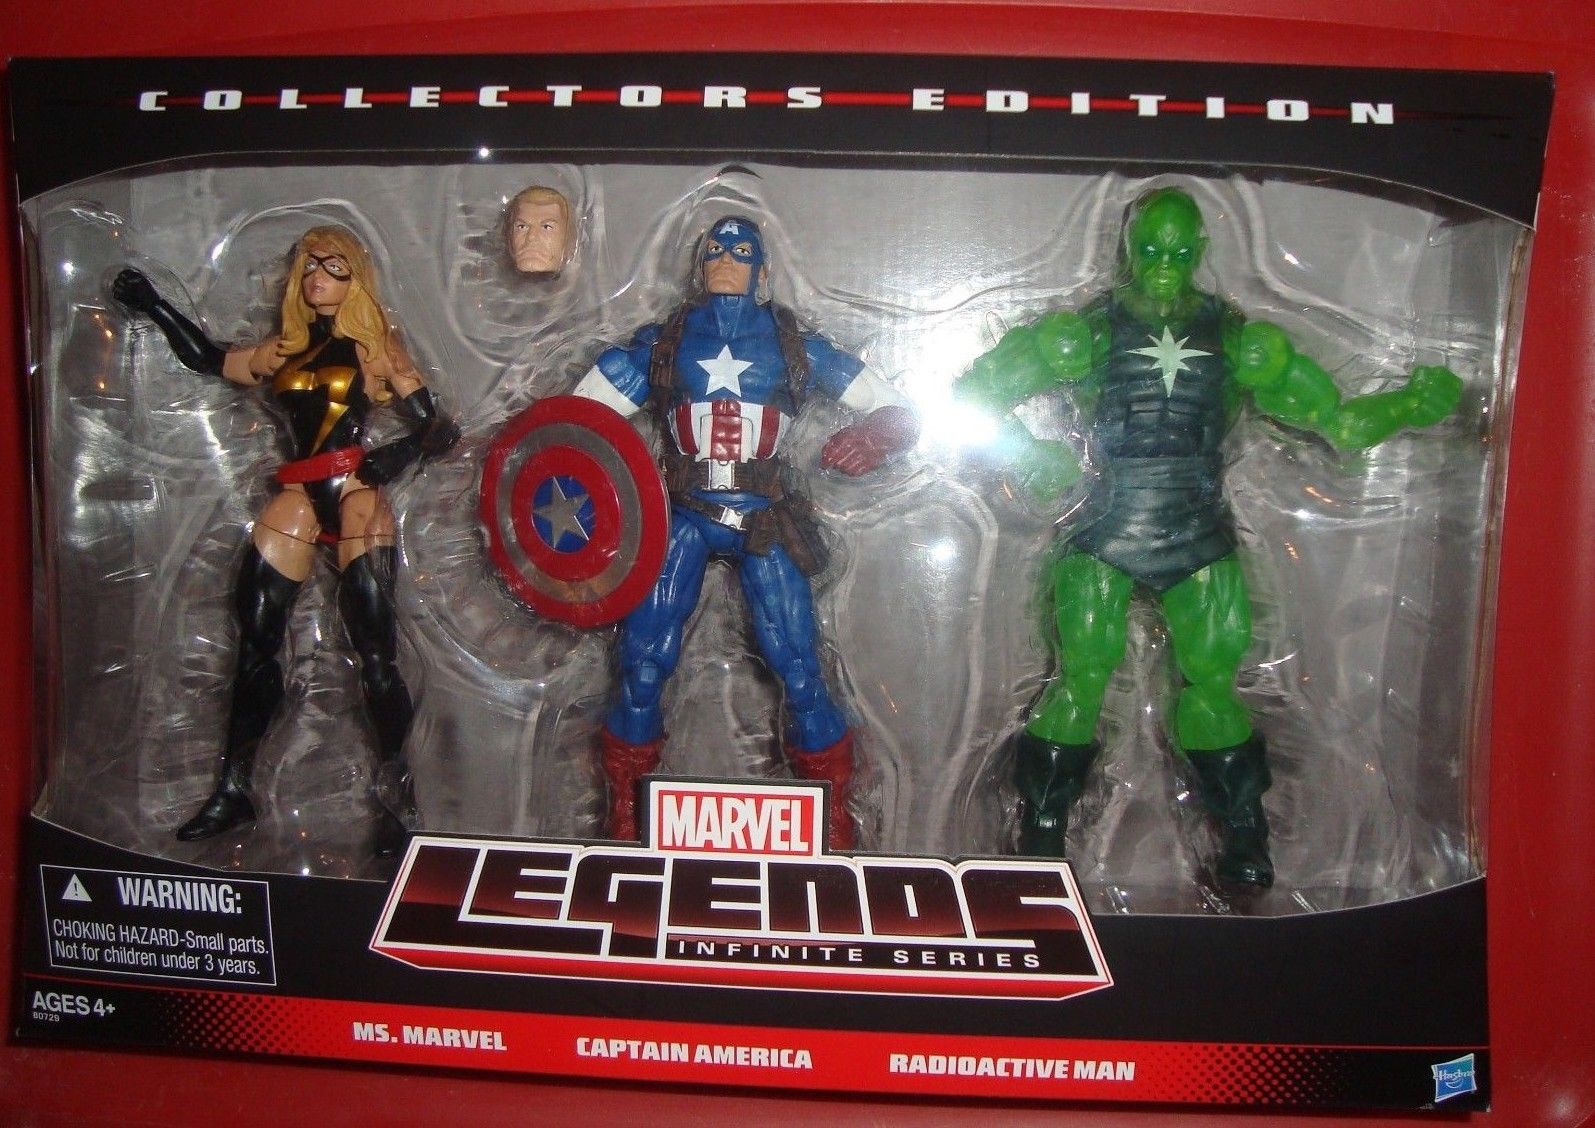 Marvel Legends infinite series 3 pack Radioactive man 6" figure Target exclusive 